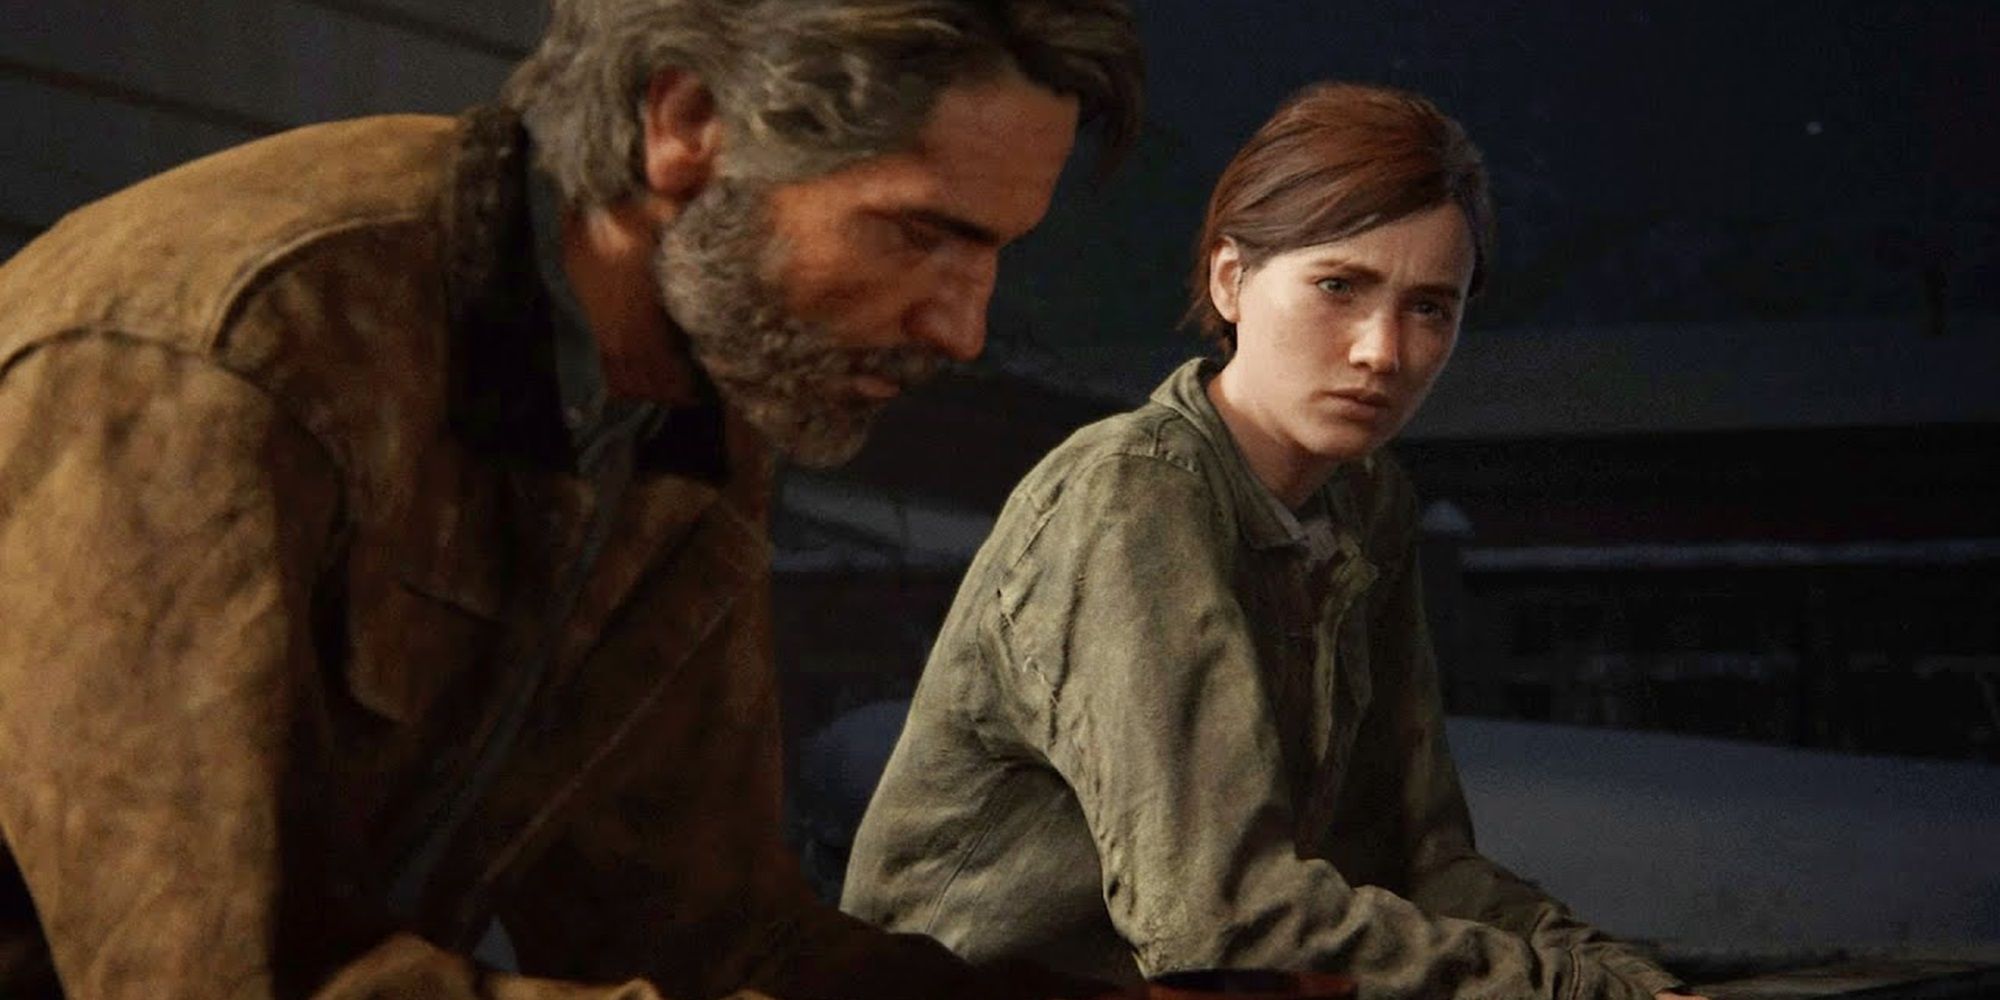 Joel e Ellie conversam na varanda em The Last of Us Part II